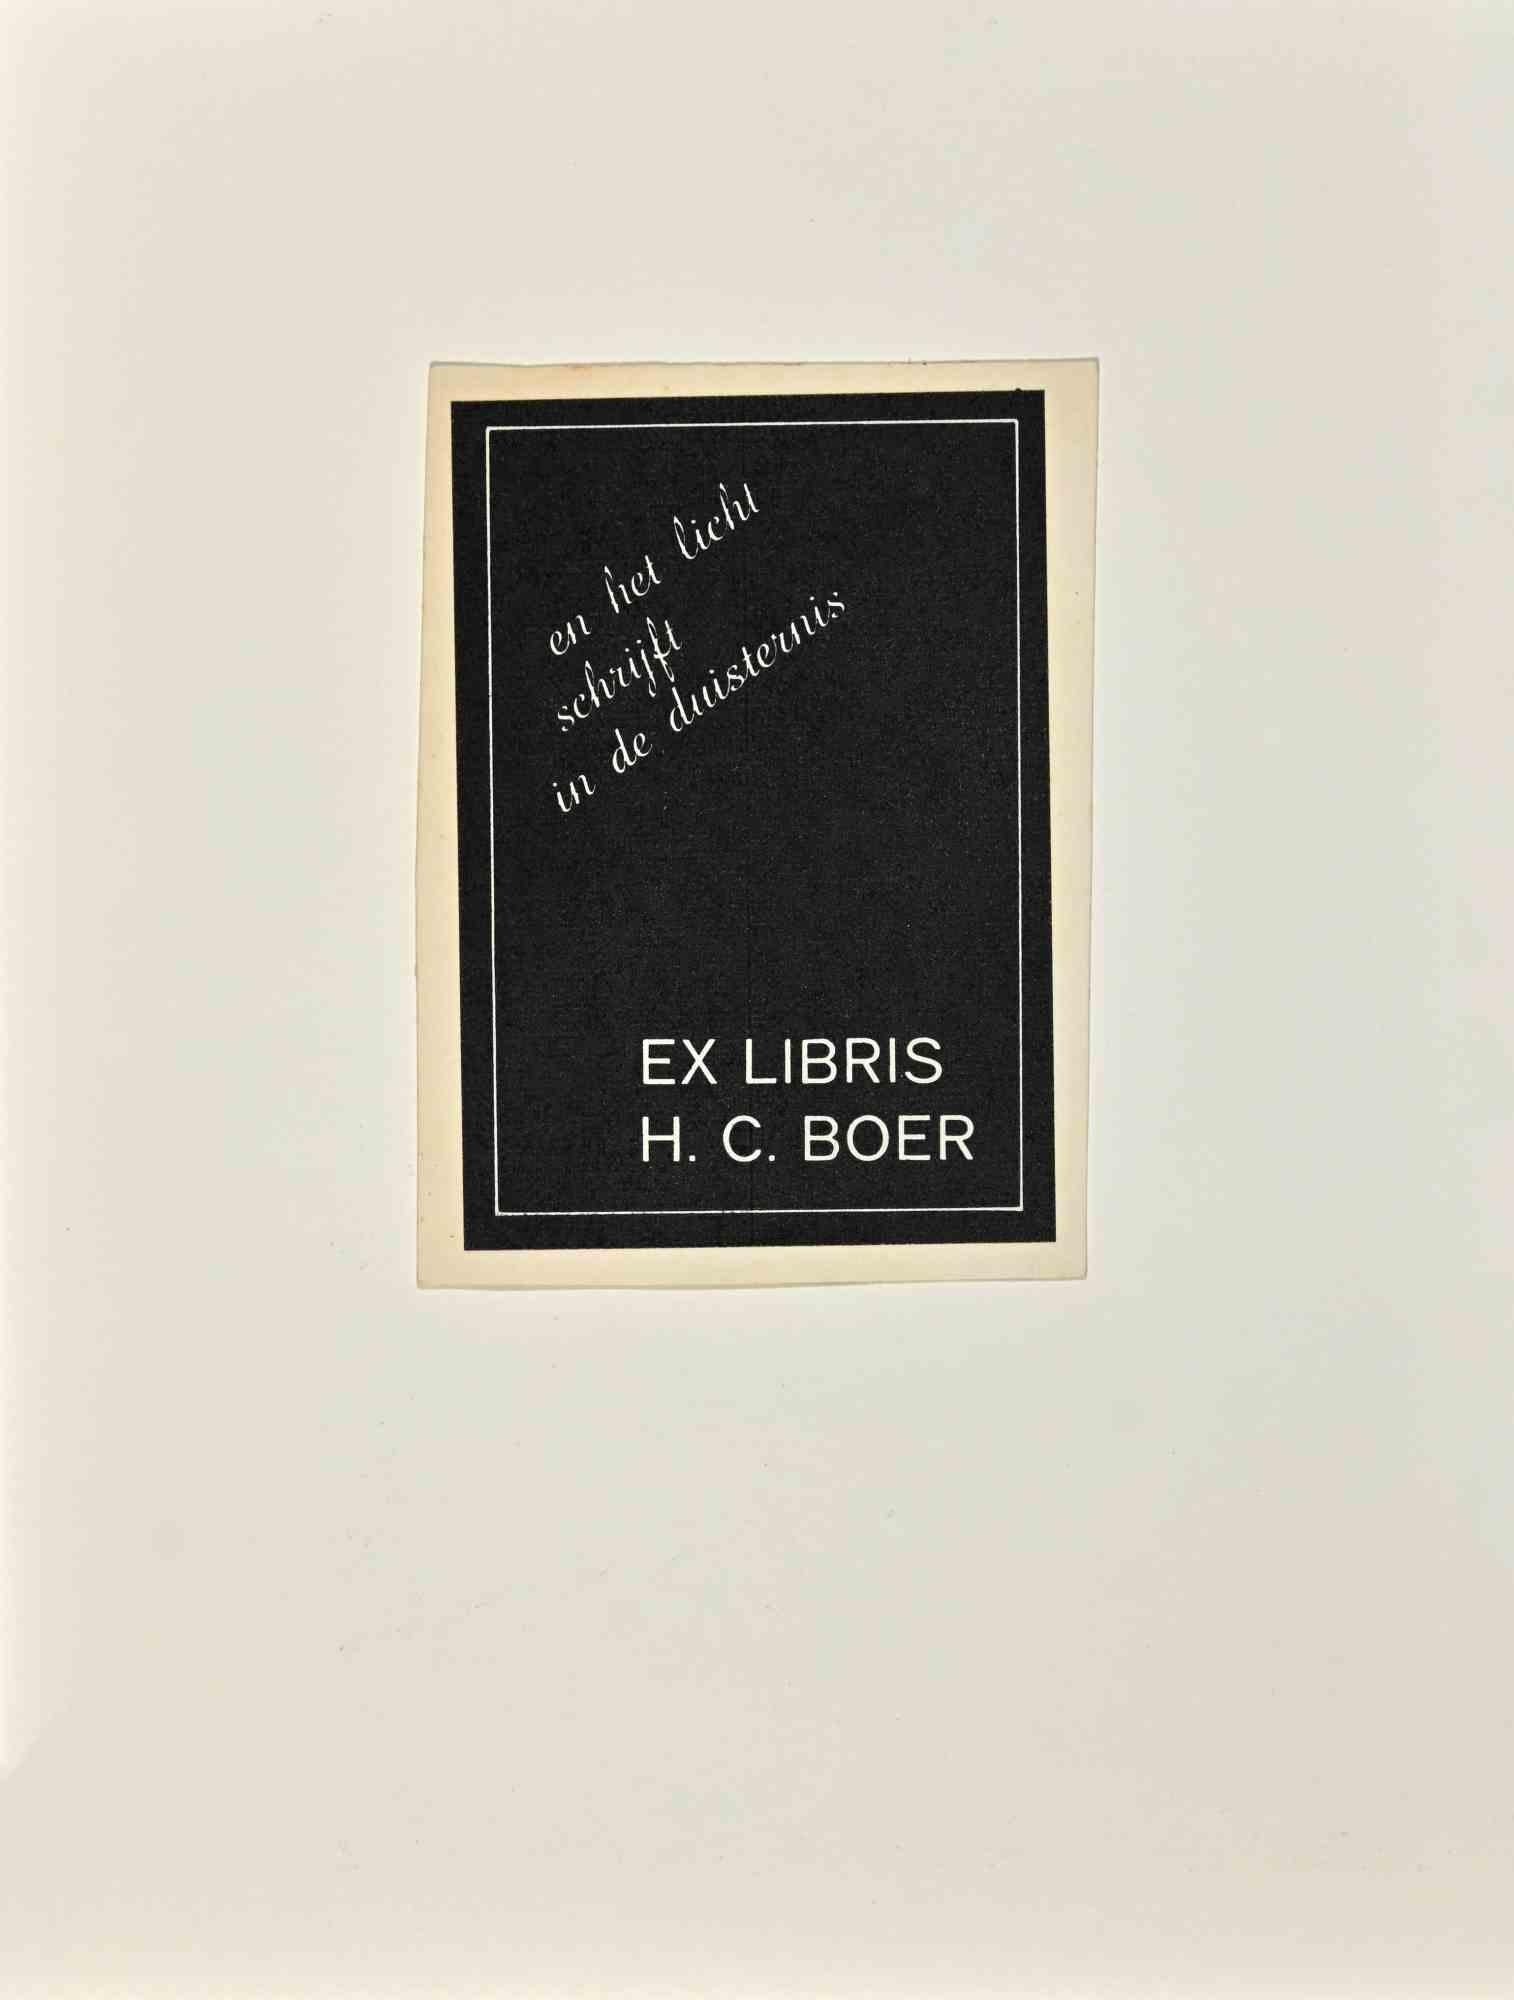  Ex Libris - H. C. Boer - Woodcut - 1950s